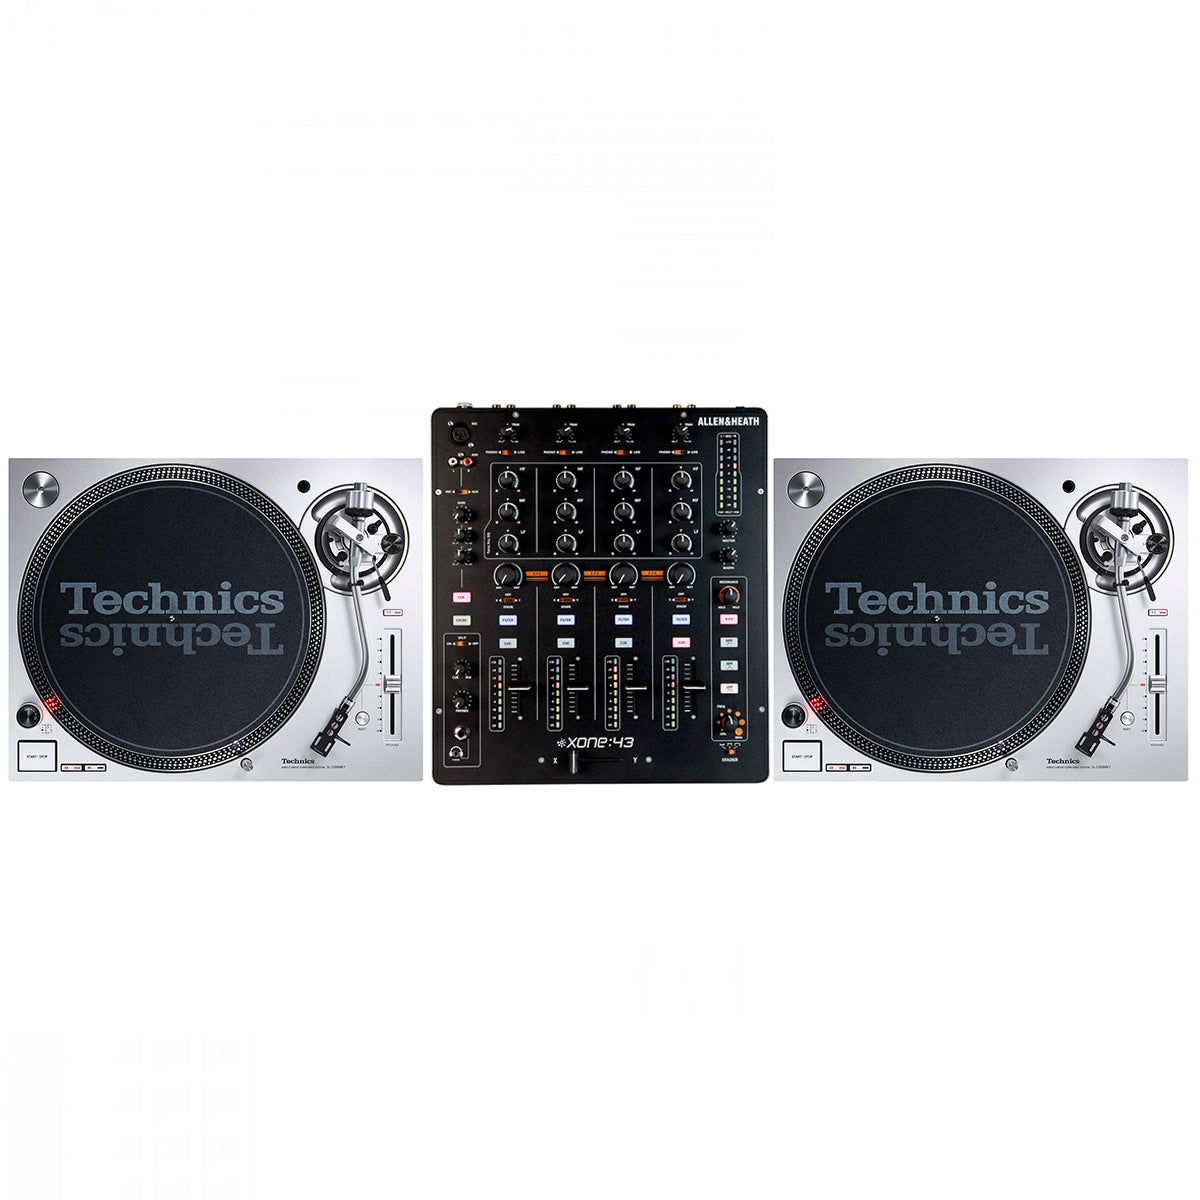 Technics SL1200 MK7 + XONE:43 Mixer